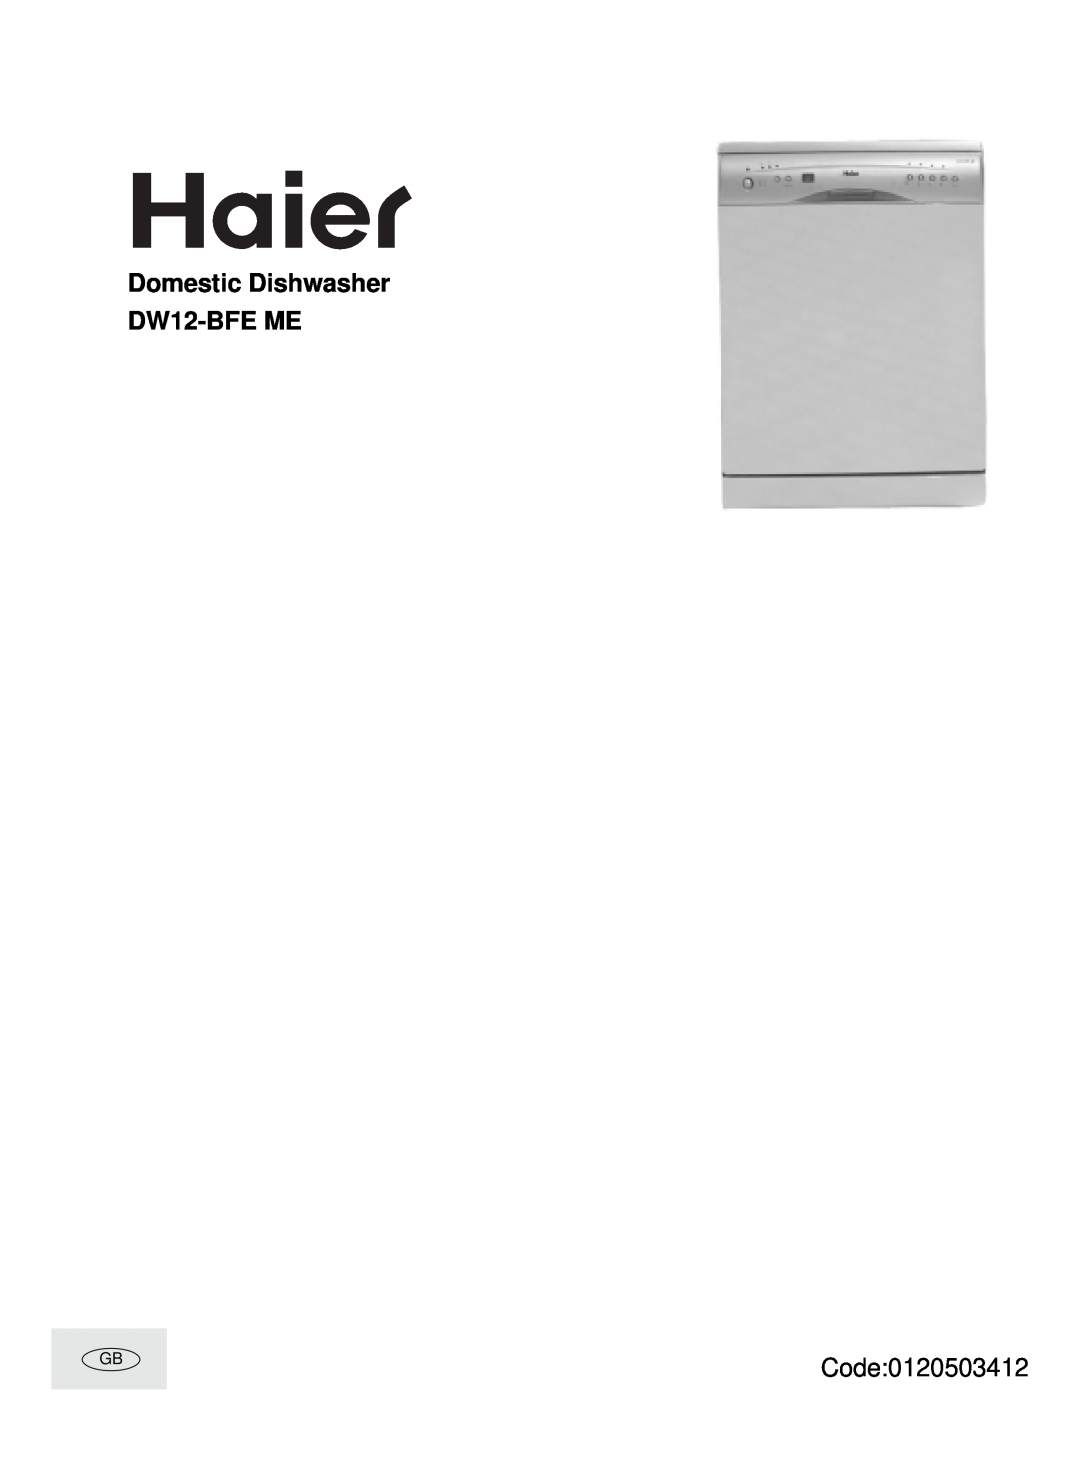 Haier manual Domestic Dishwasher DW12-BFE ME, Code 